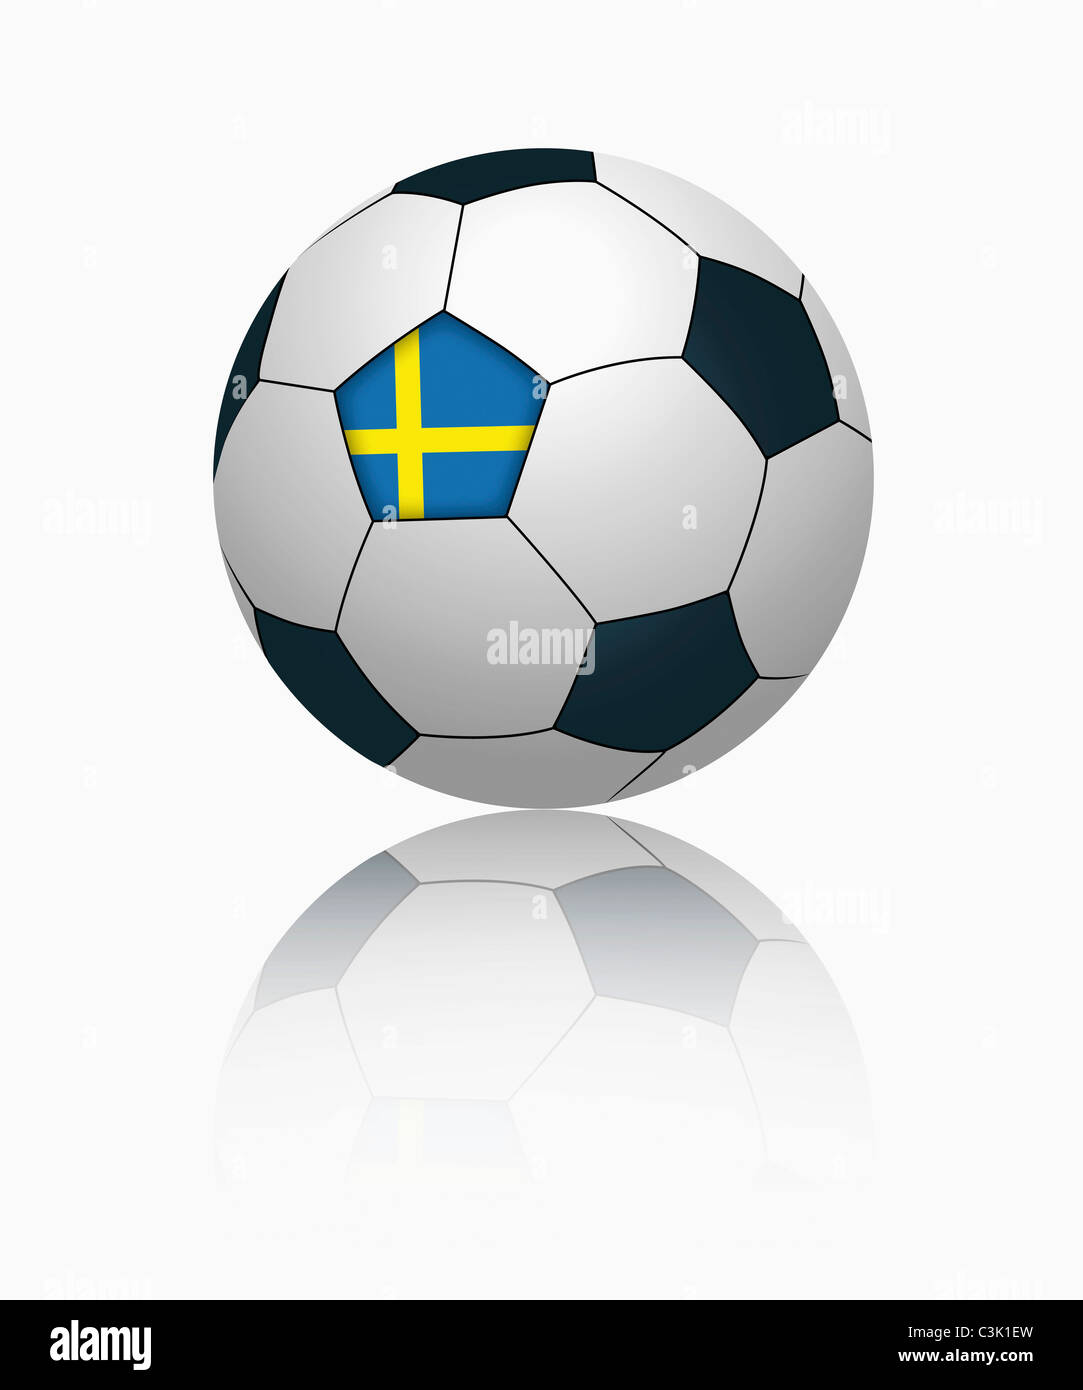 Swedish flag on football, close up Stock Photo